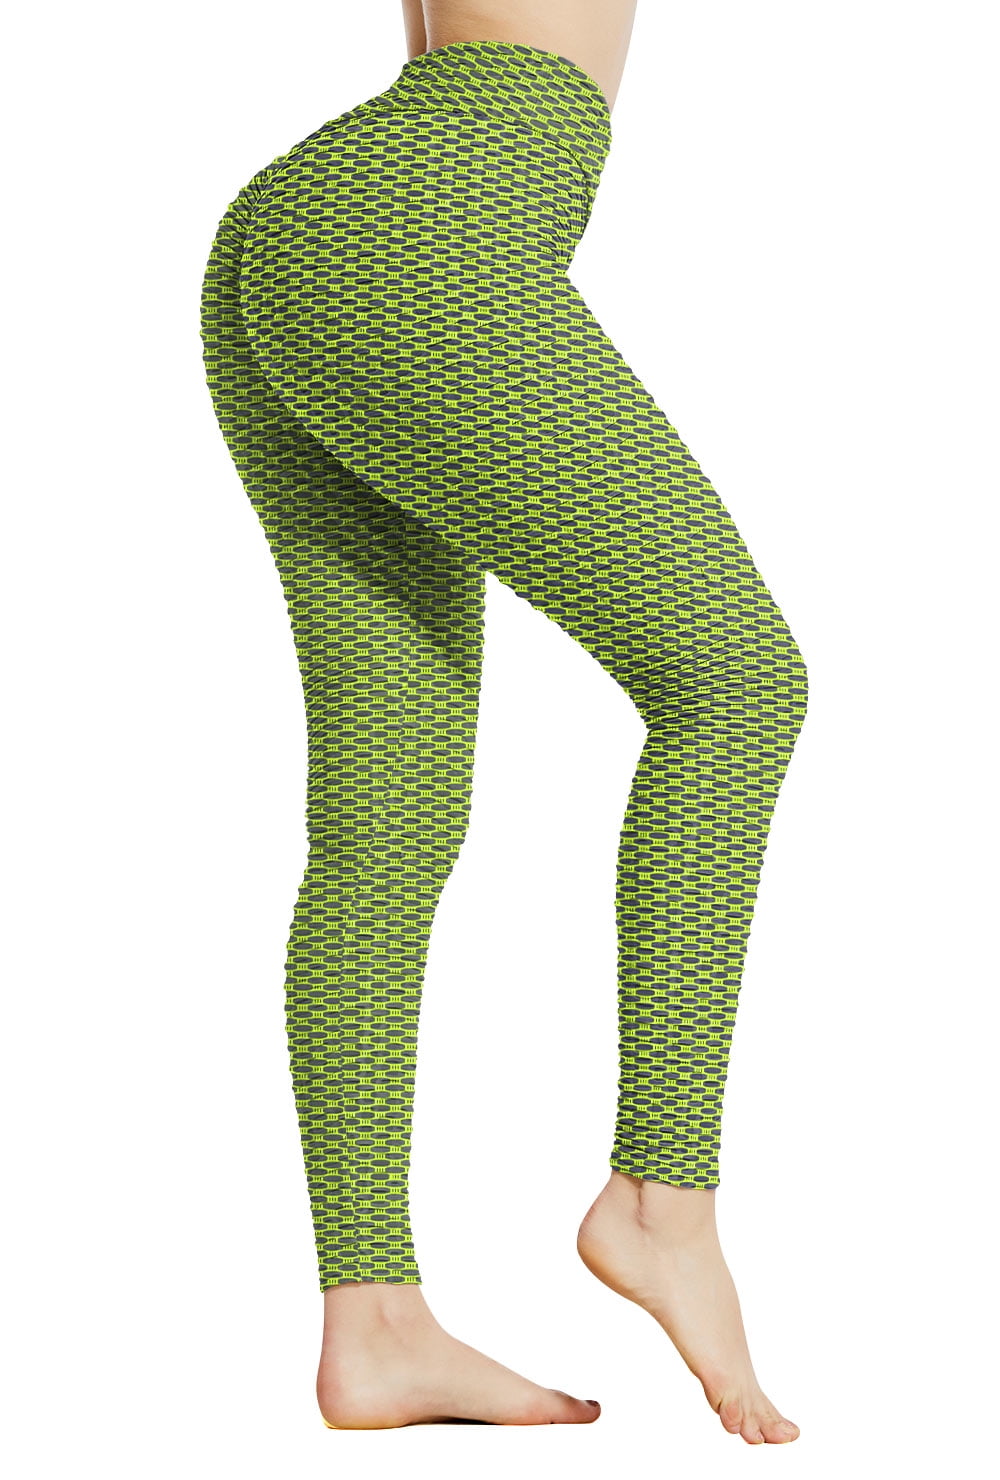 Yoga Pants For Women Womens Stretch Yoga Leggings Fitness Running Gym  Sports Full Length Active Pants - Walmart.com